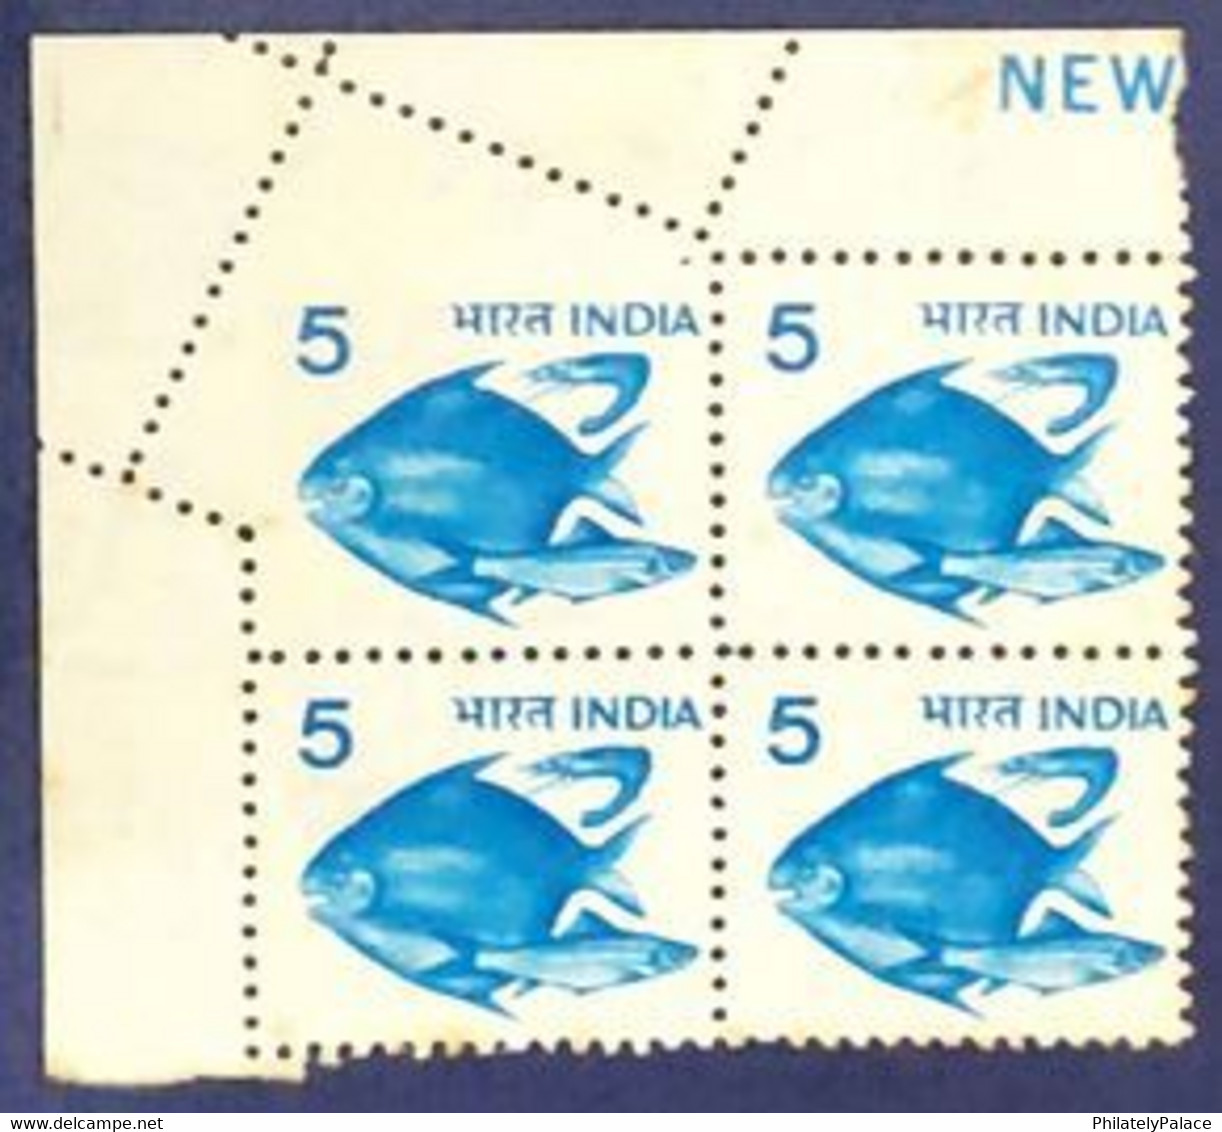 India 1982 ERROR Fish Misperforation Animal Marine Block MNH (**) Inde Indien - Major Error - RARE FOR EXHIBIT - Errors, Freaks & Oddities (EFO)